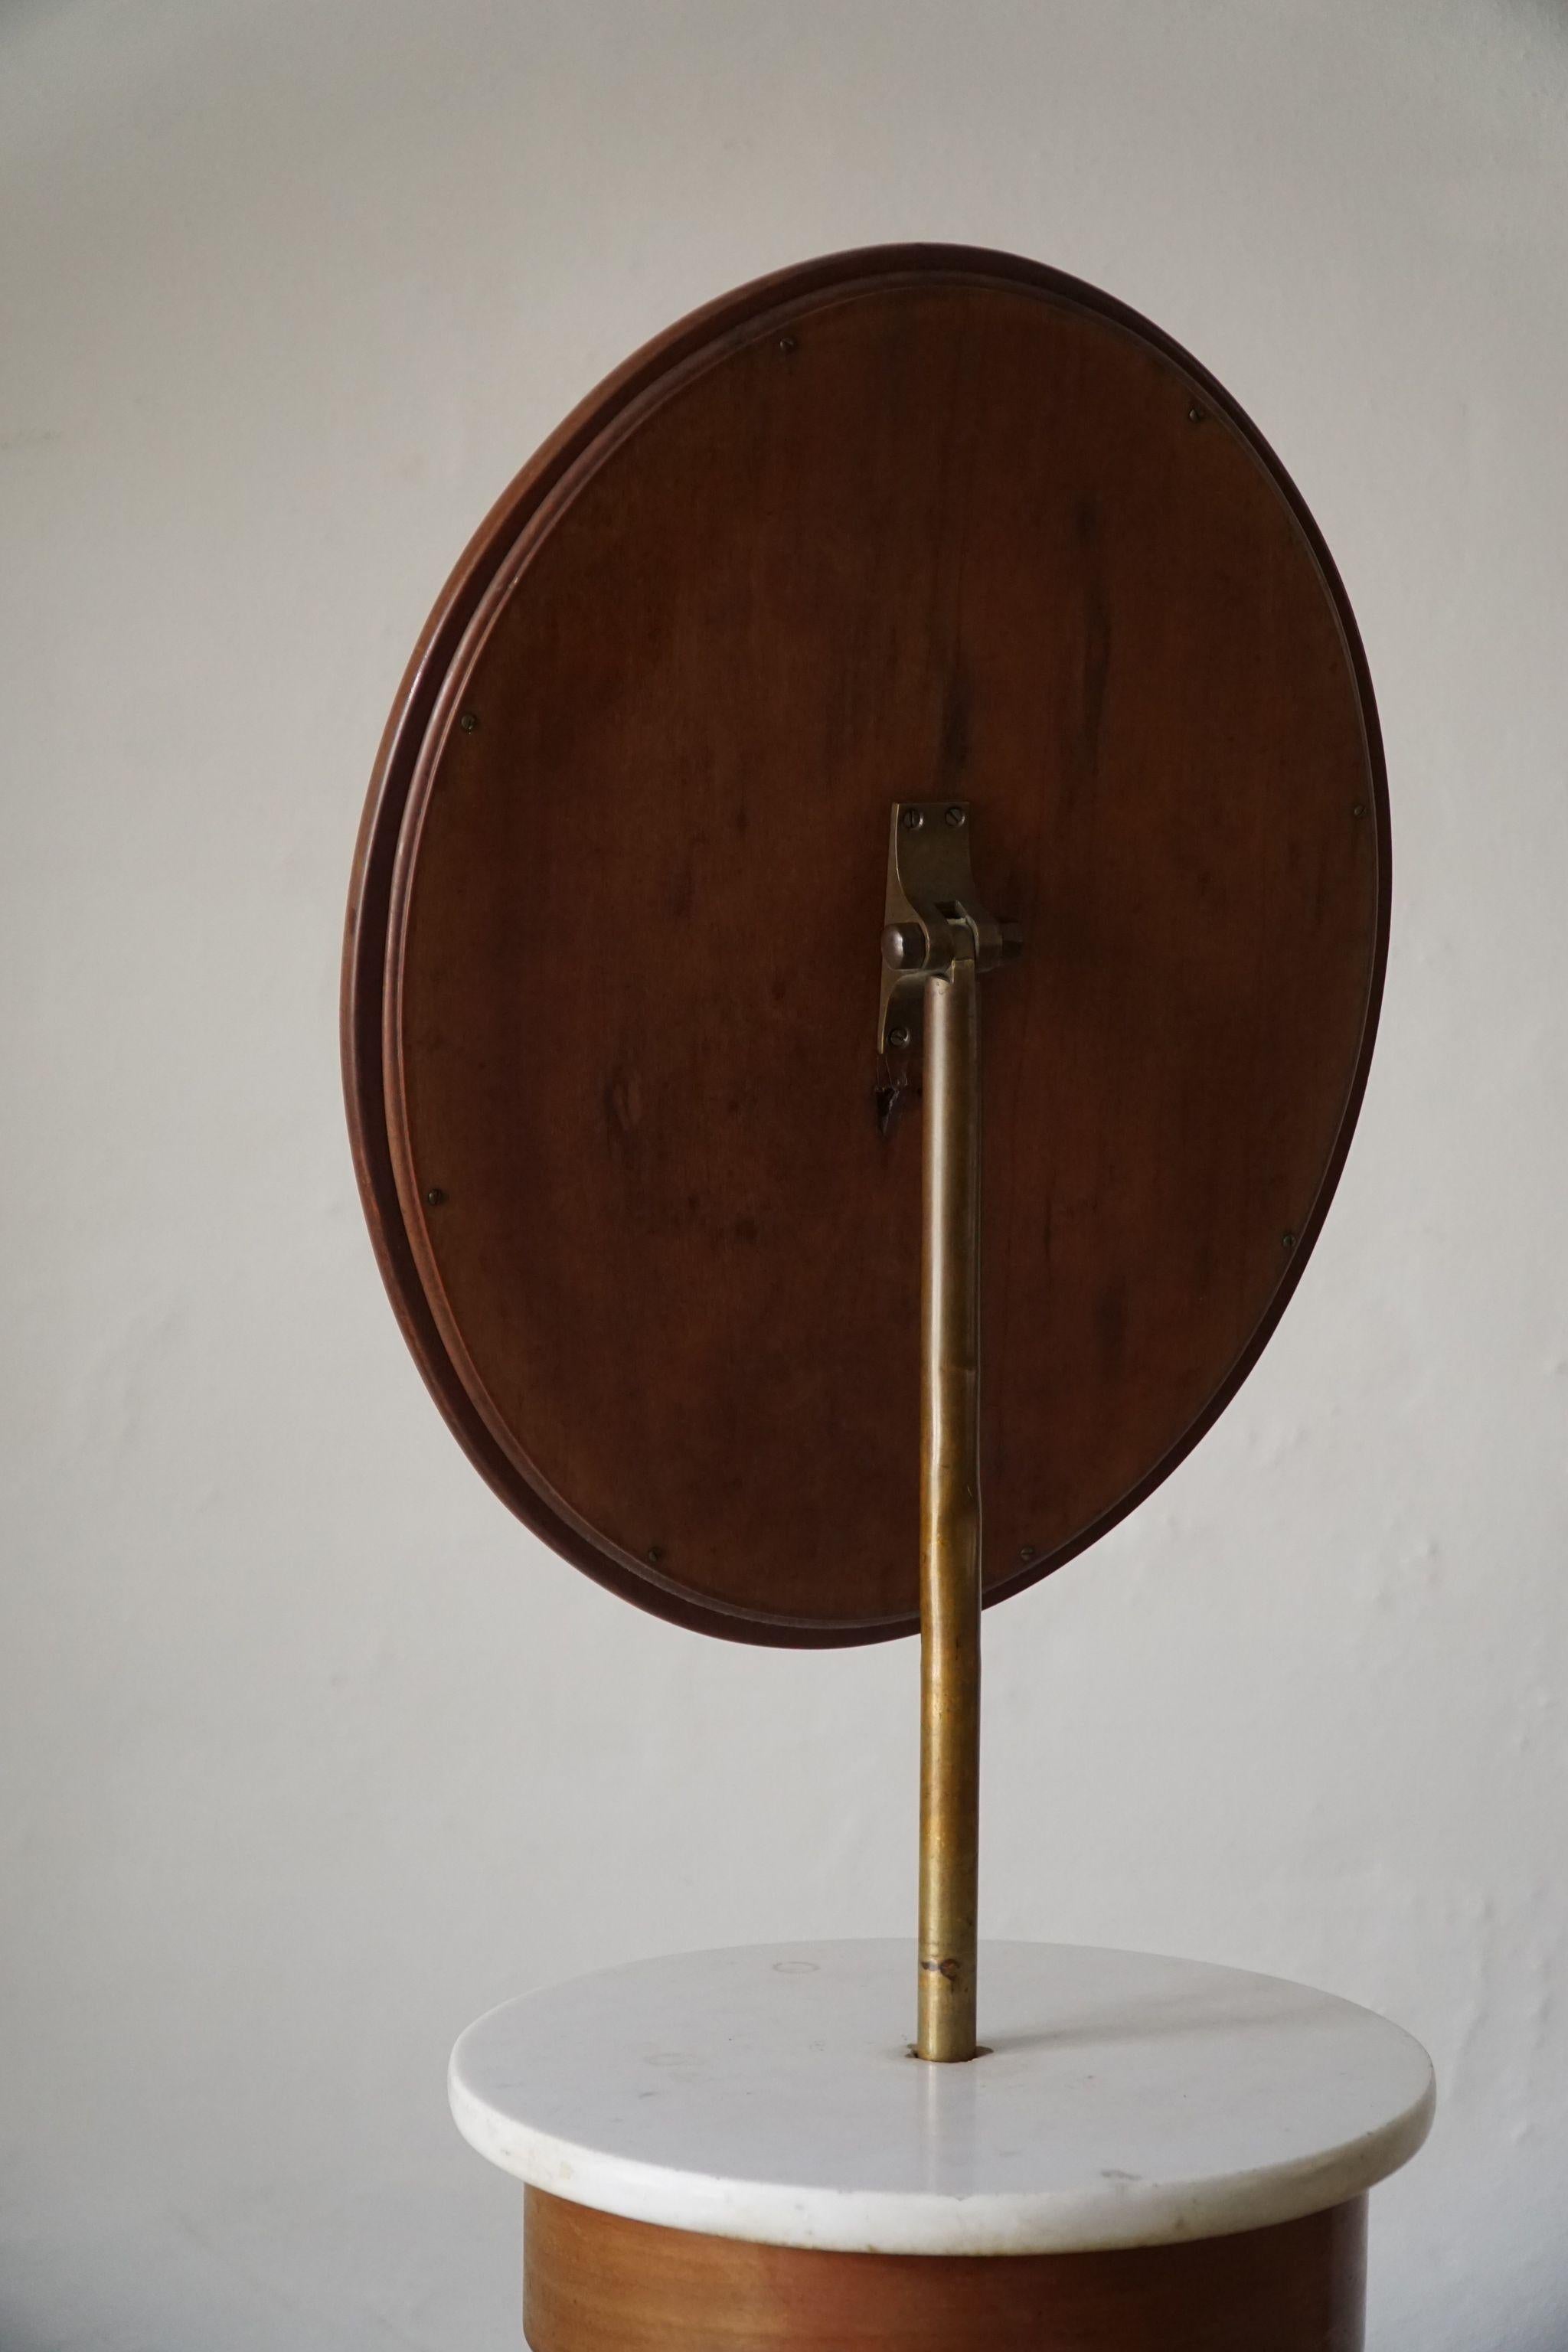 20th Century Italian Art Deco Adjustable Pedistal Mirror in Walnut, Late Empire Style, 1940s